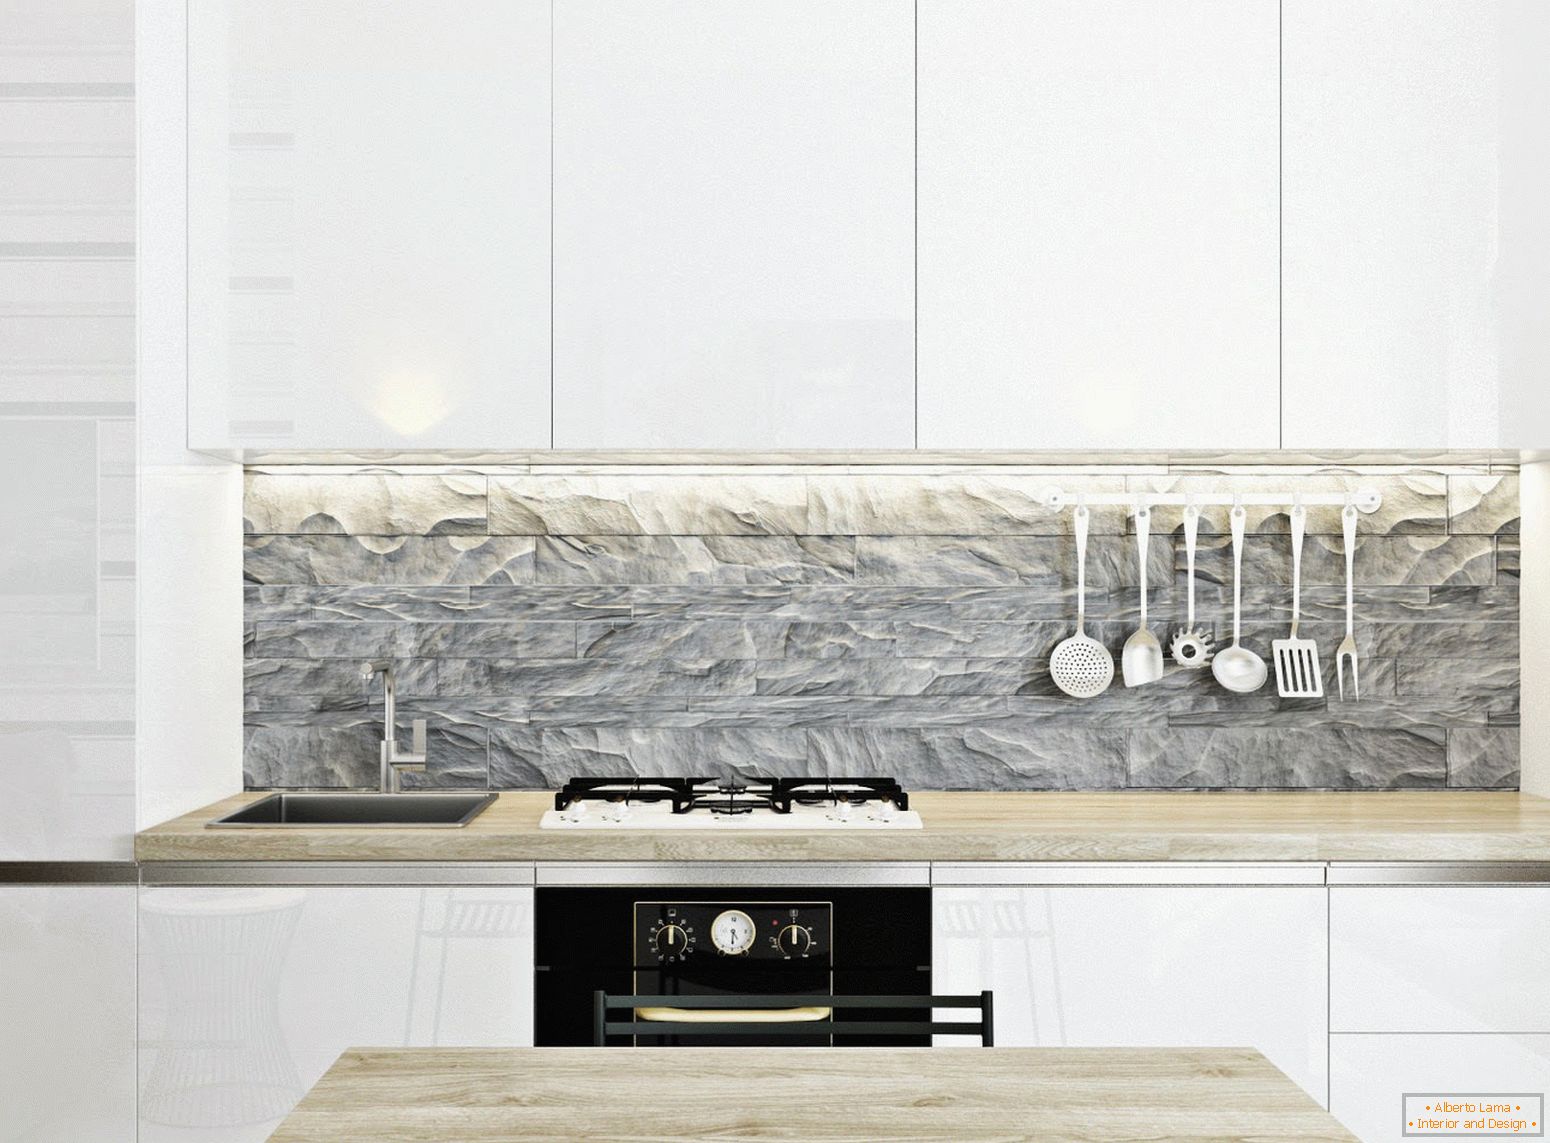 Stylish kitchen in the style of white minimalism